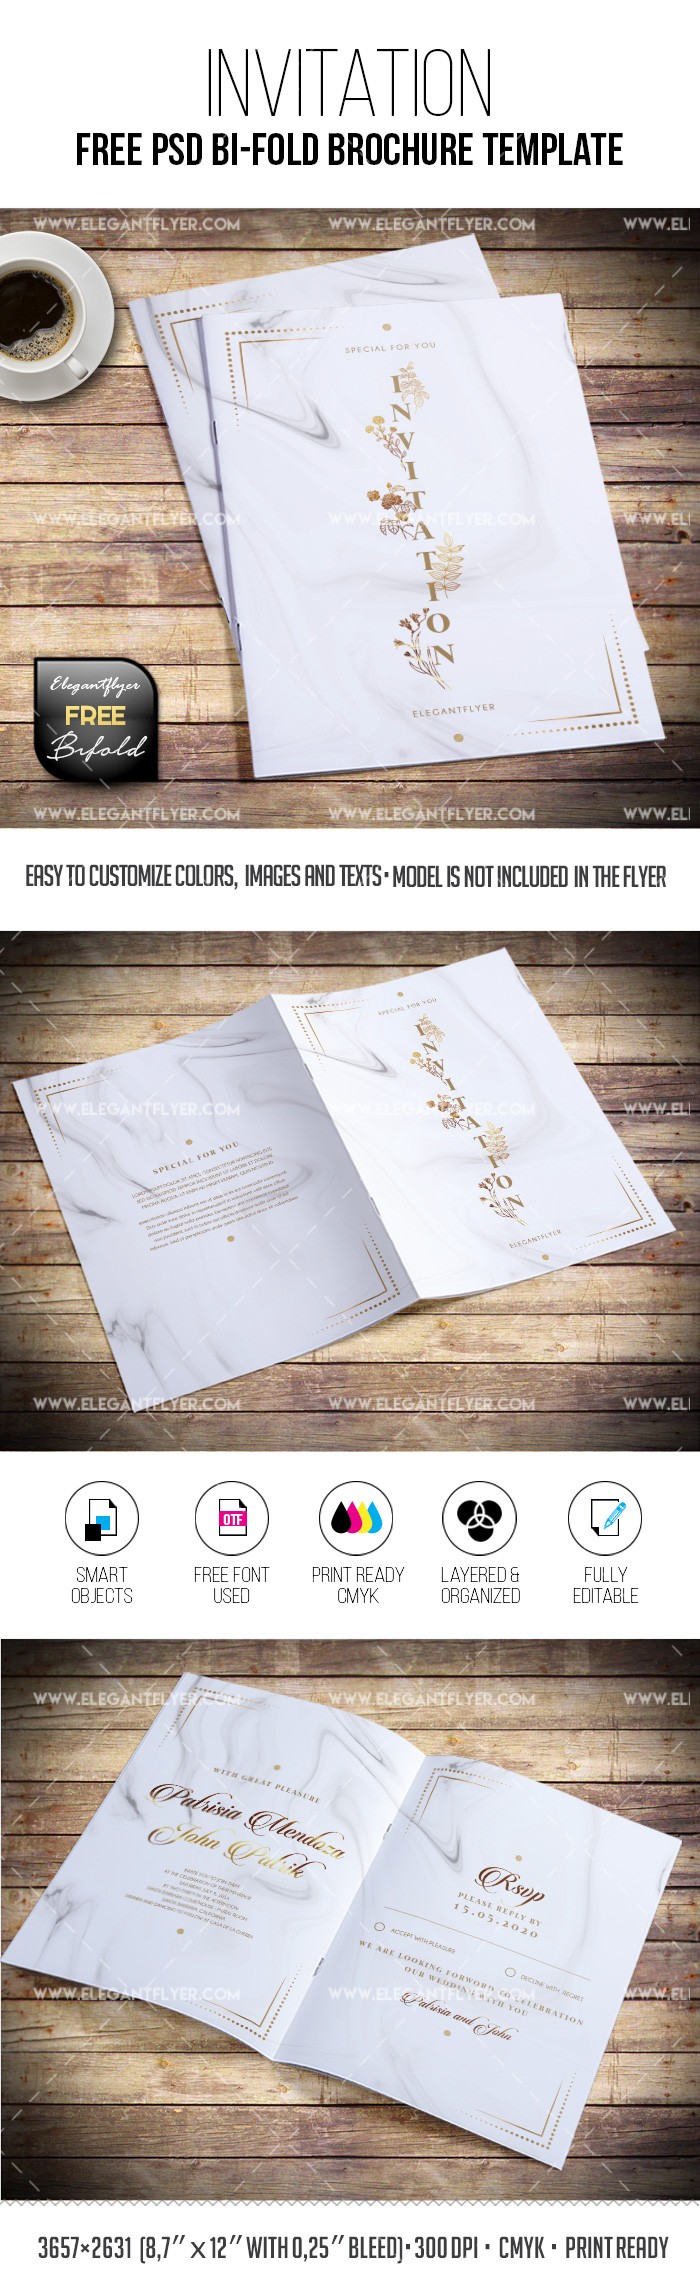 Invitation Bi-fold Brochure Template by ElegantFlyer